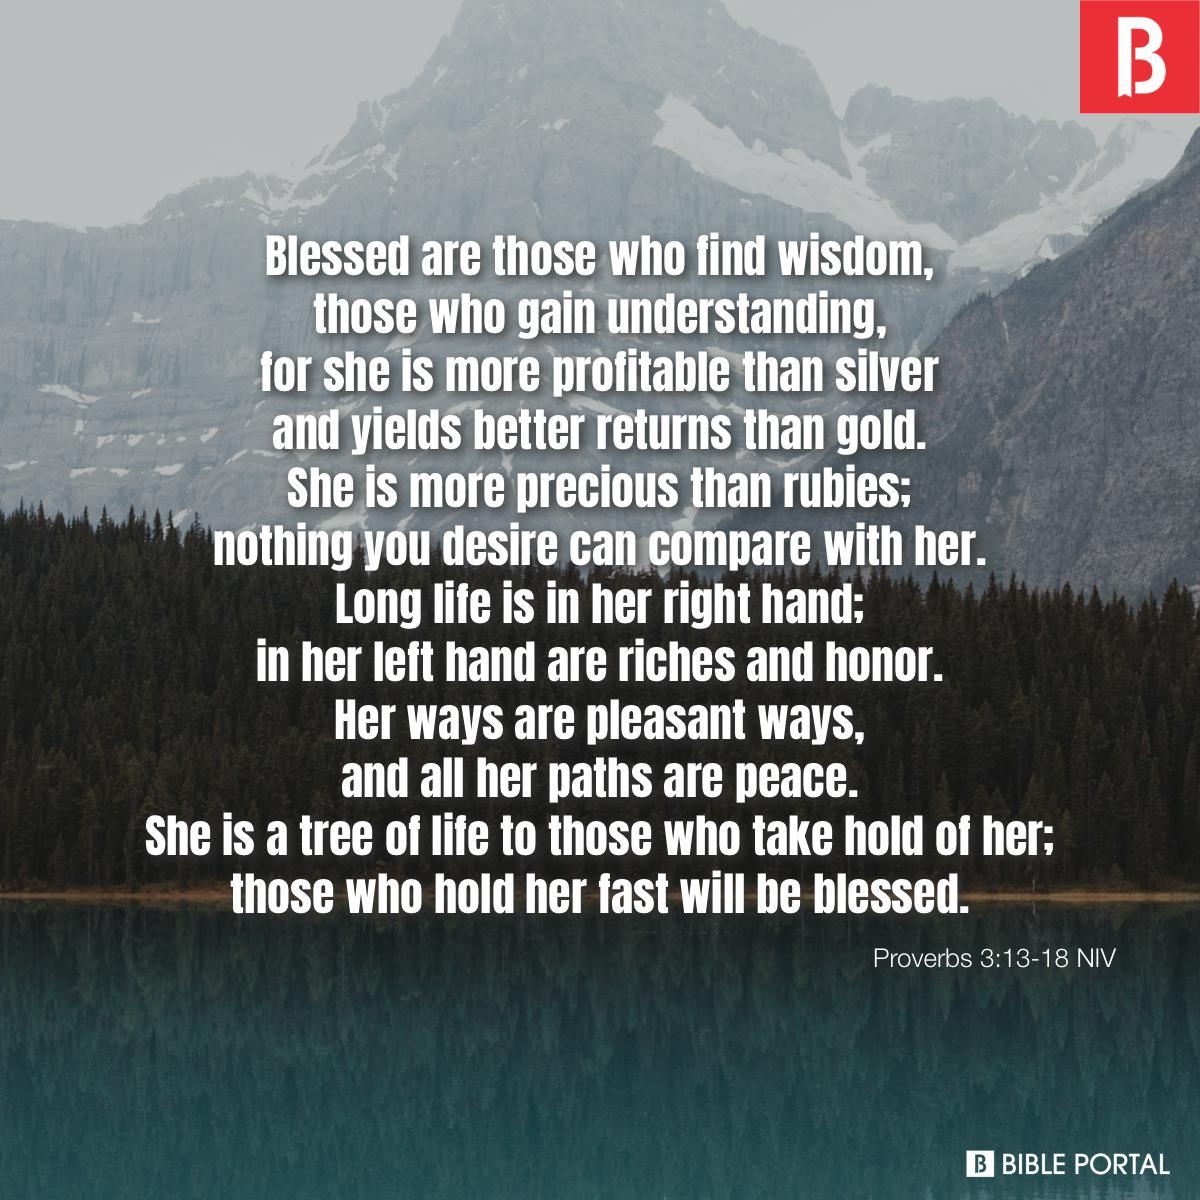 Proverbs 3:13-18 NIV